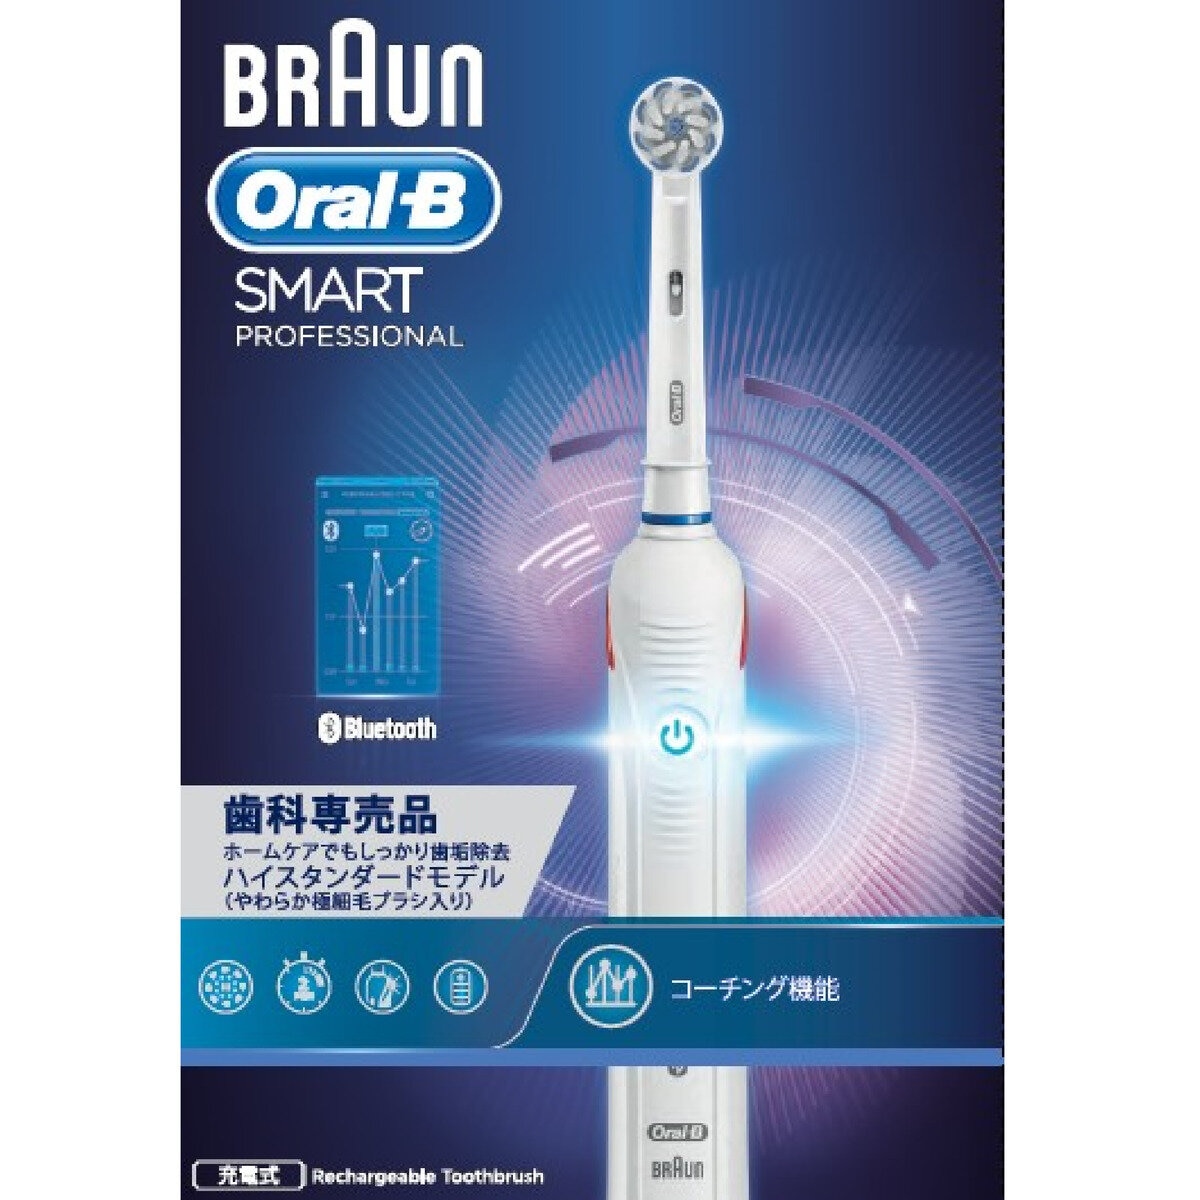 BRAUN oral-B smart series